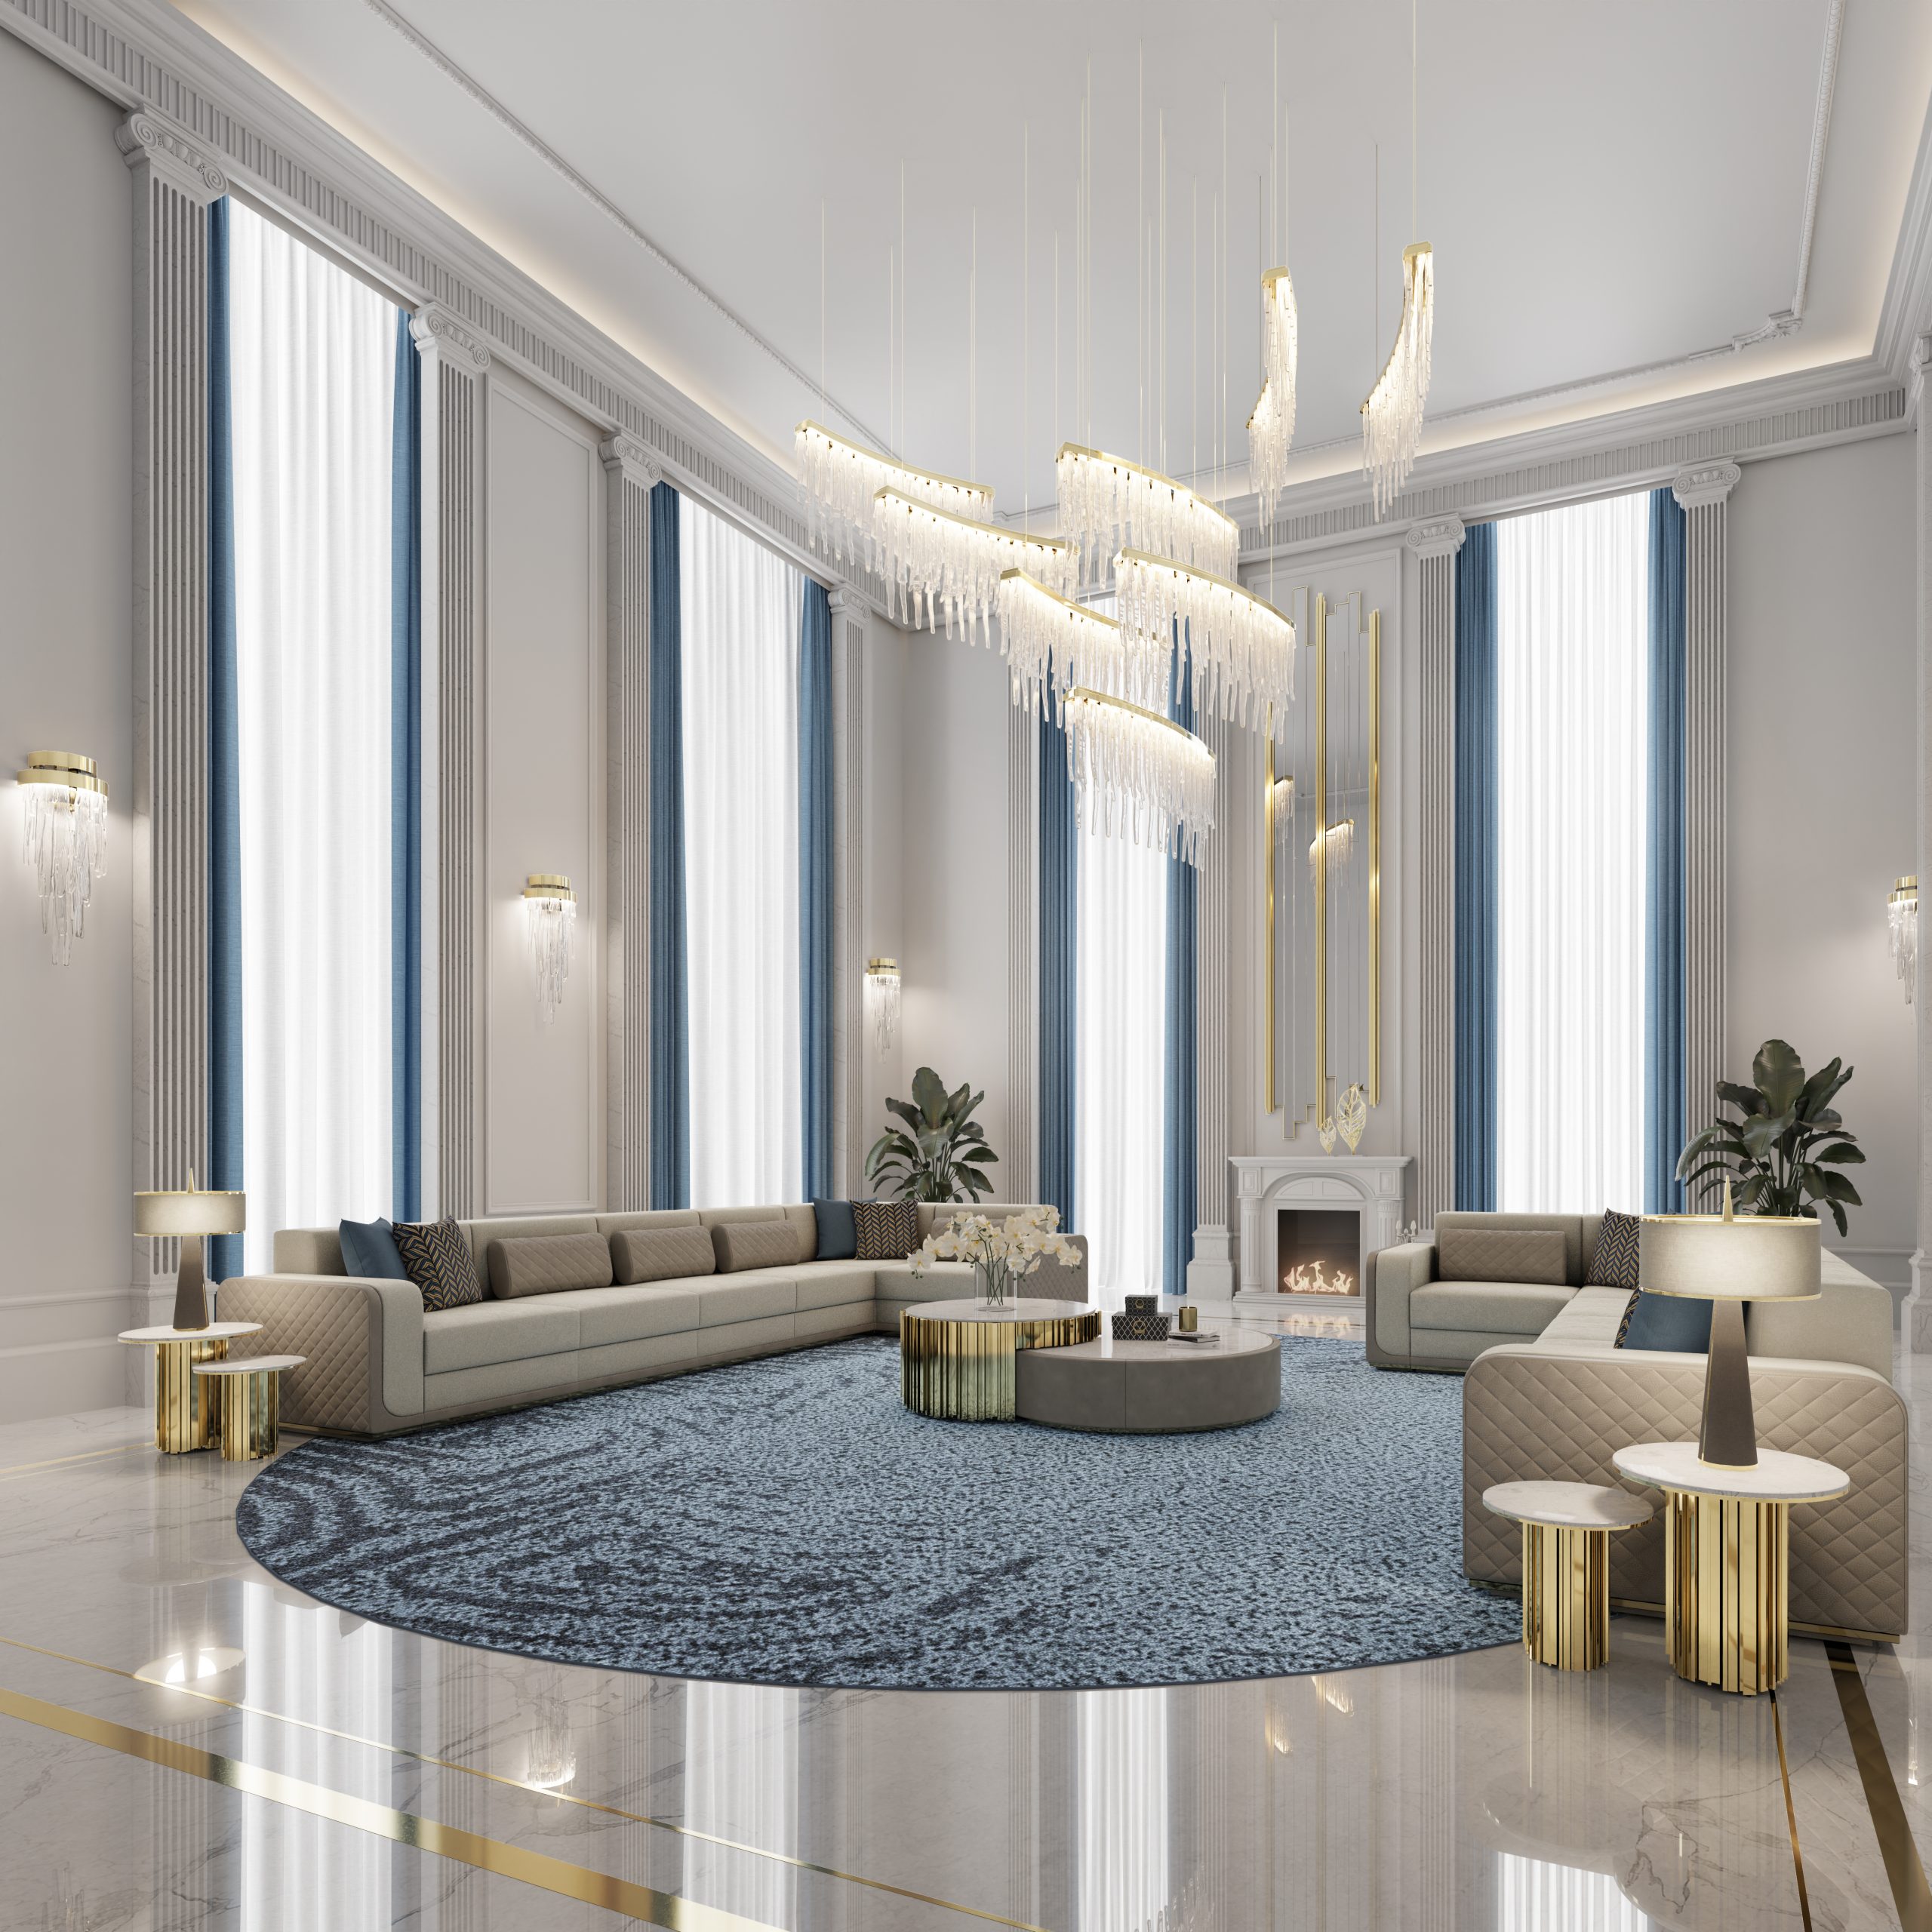 Living Room Décor That Exudes Boundless Elegance